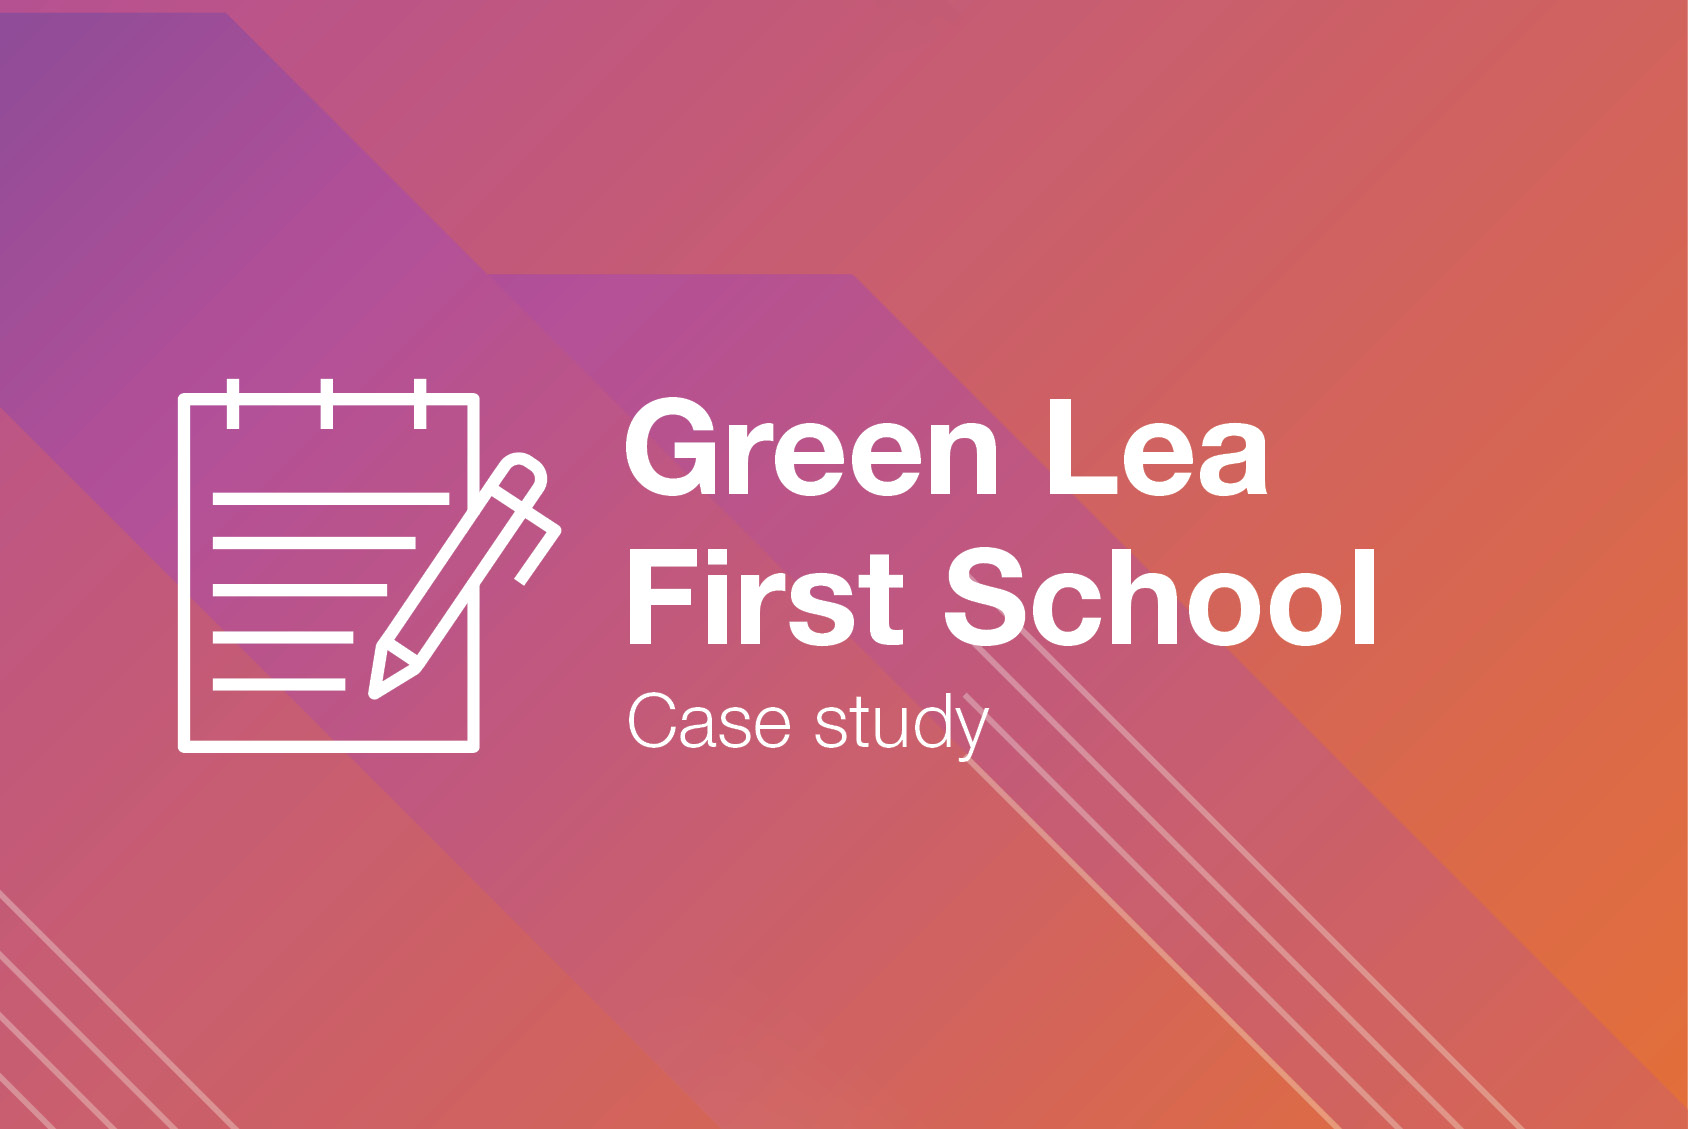 Case study - Green Lea